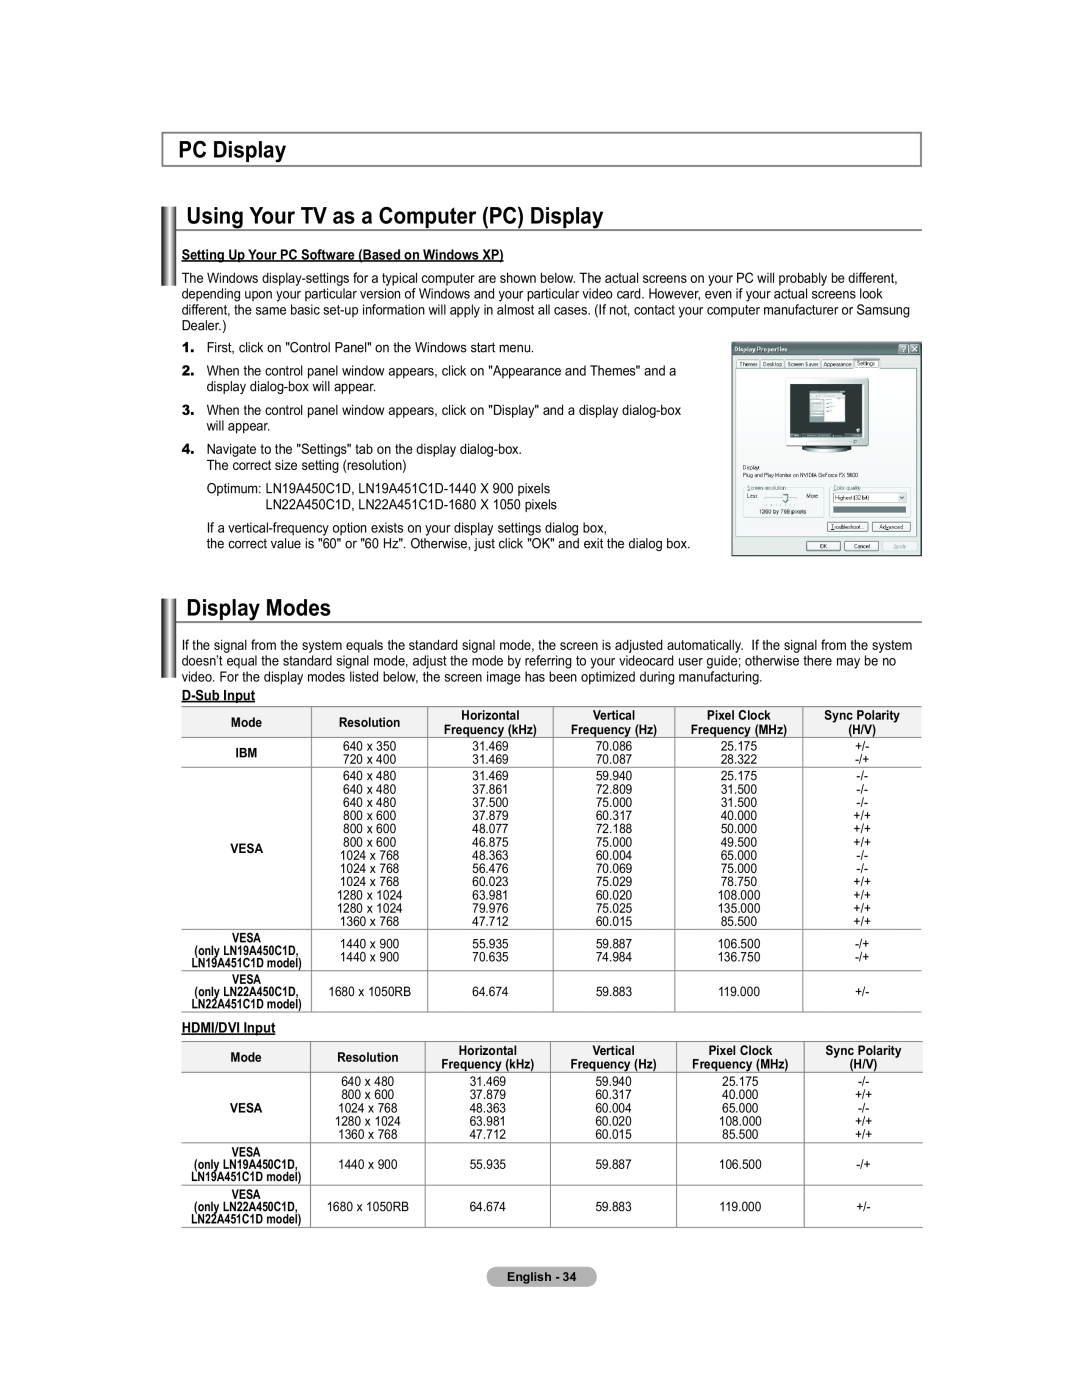 Samsung 451 user manual PC Display Using Your TV as a Computer PC Display, Display Modes, D-Sub Input, HDMI/DVI Input 